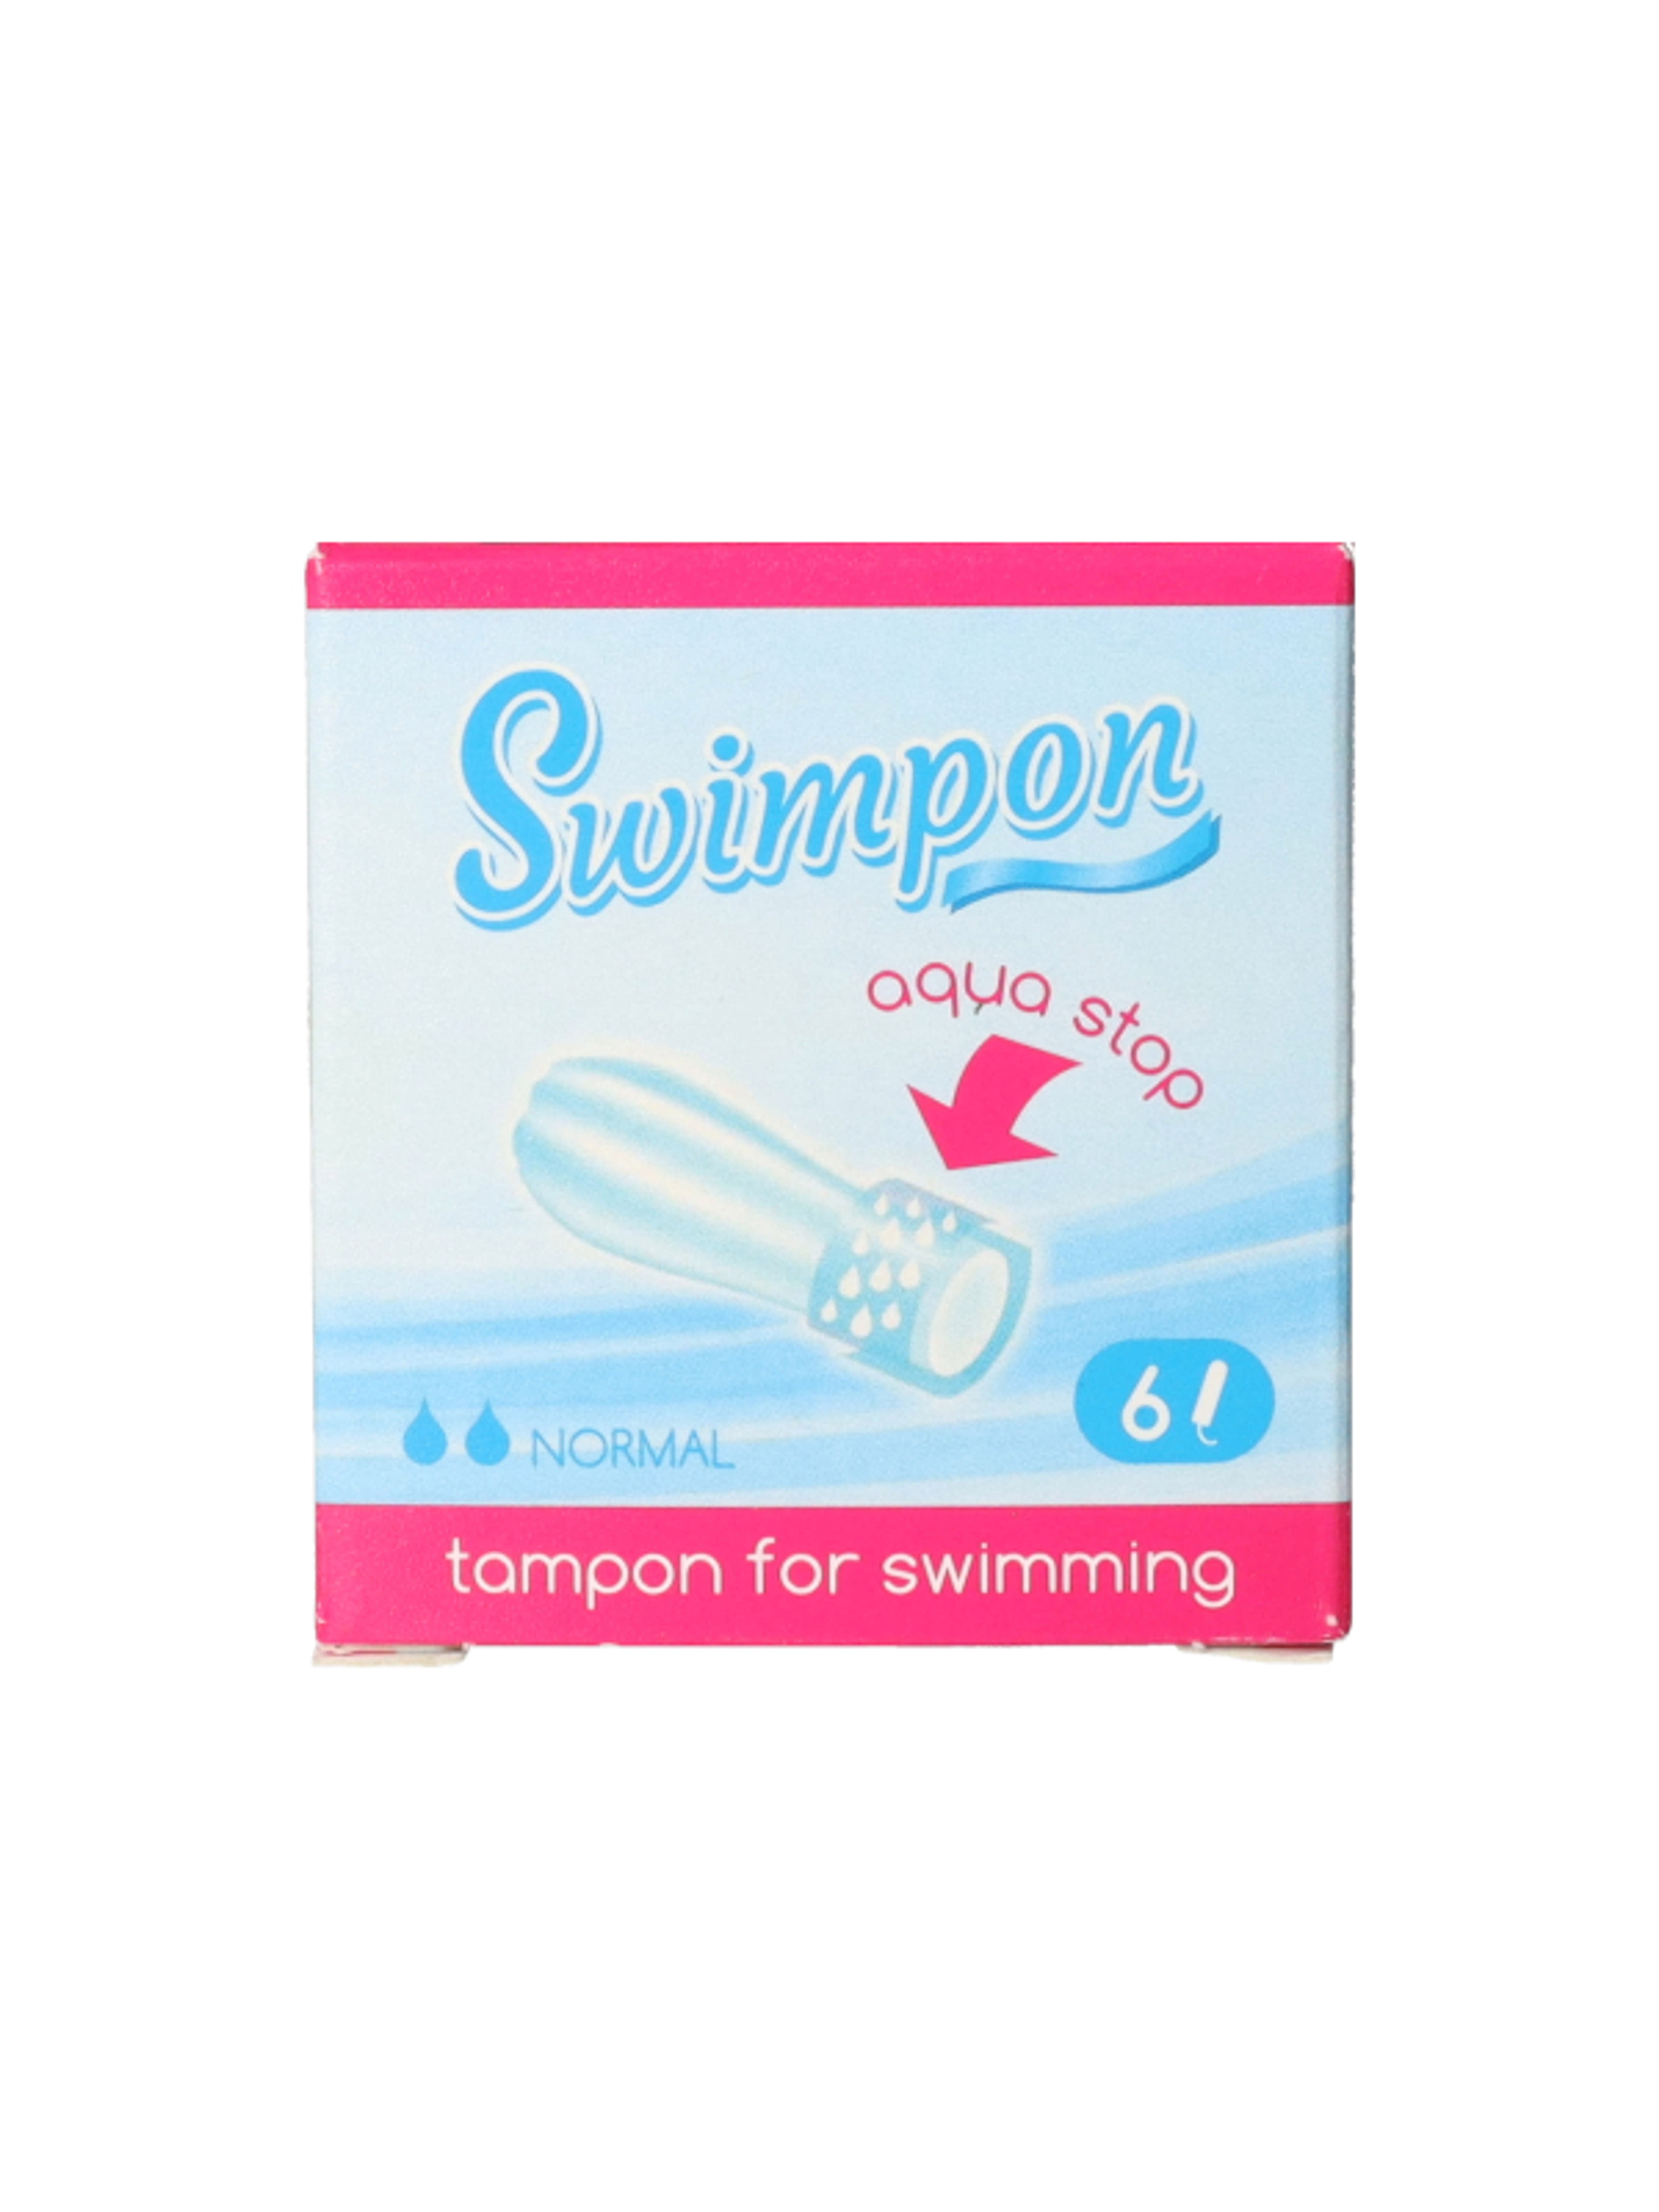 Swimpon tampon aqua stop - 6 db